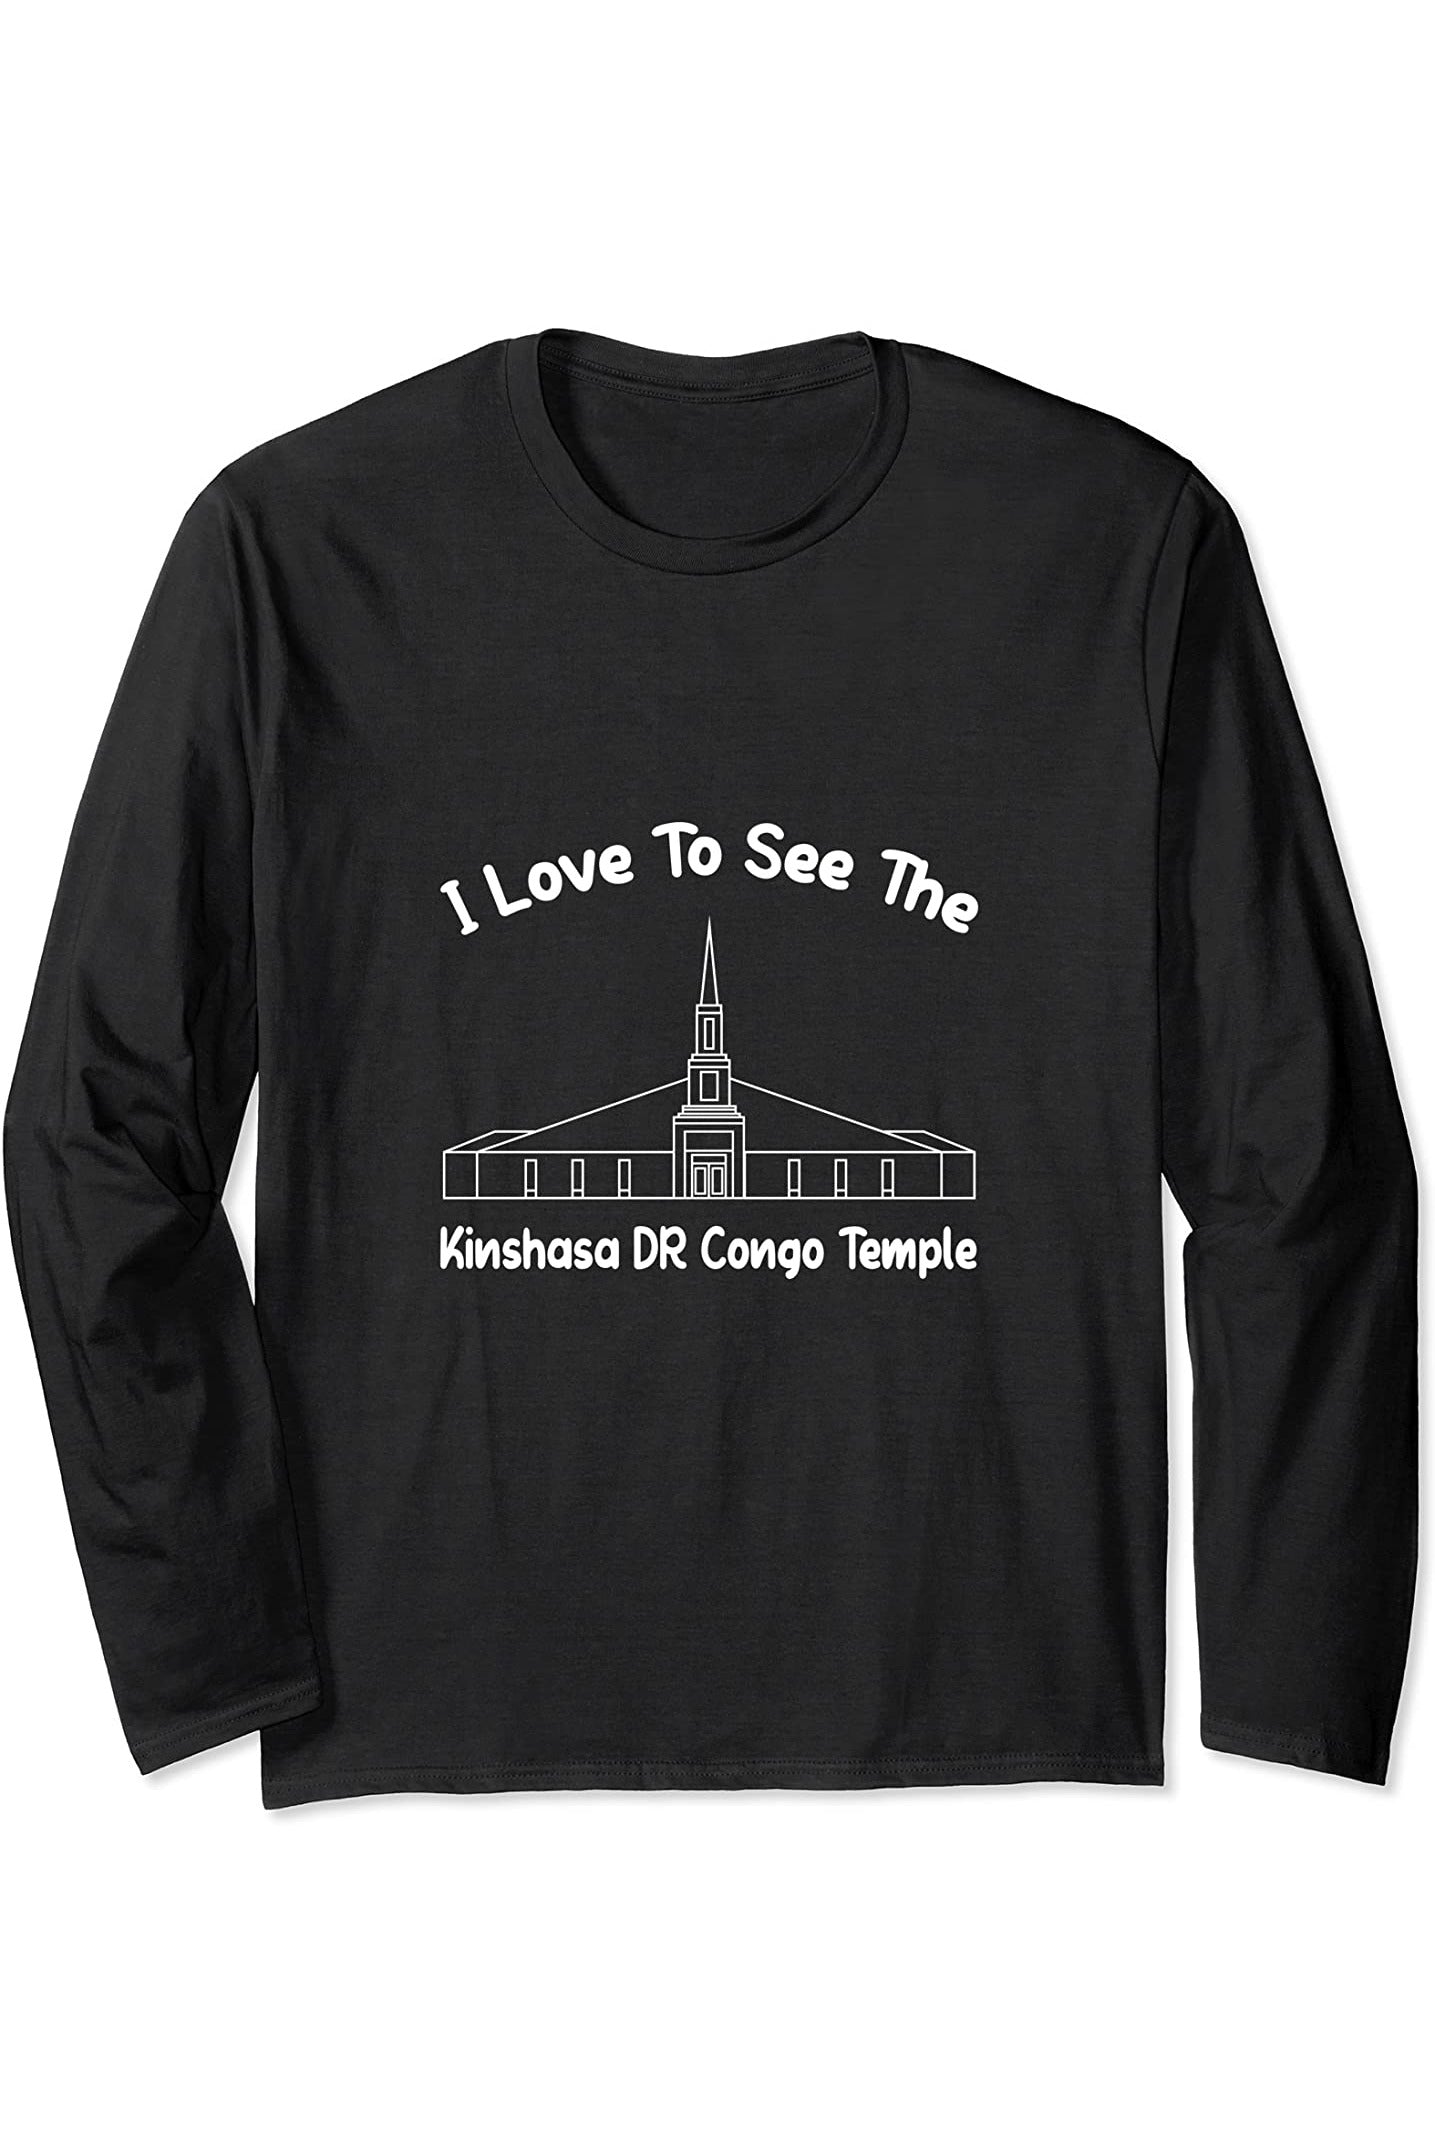 Kinshasa DR Congo Temple Long Sleeve T-Shirt - Primary Style (English) US